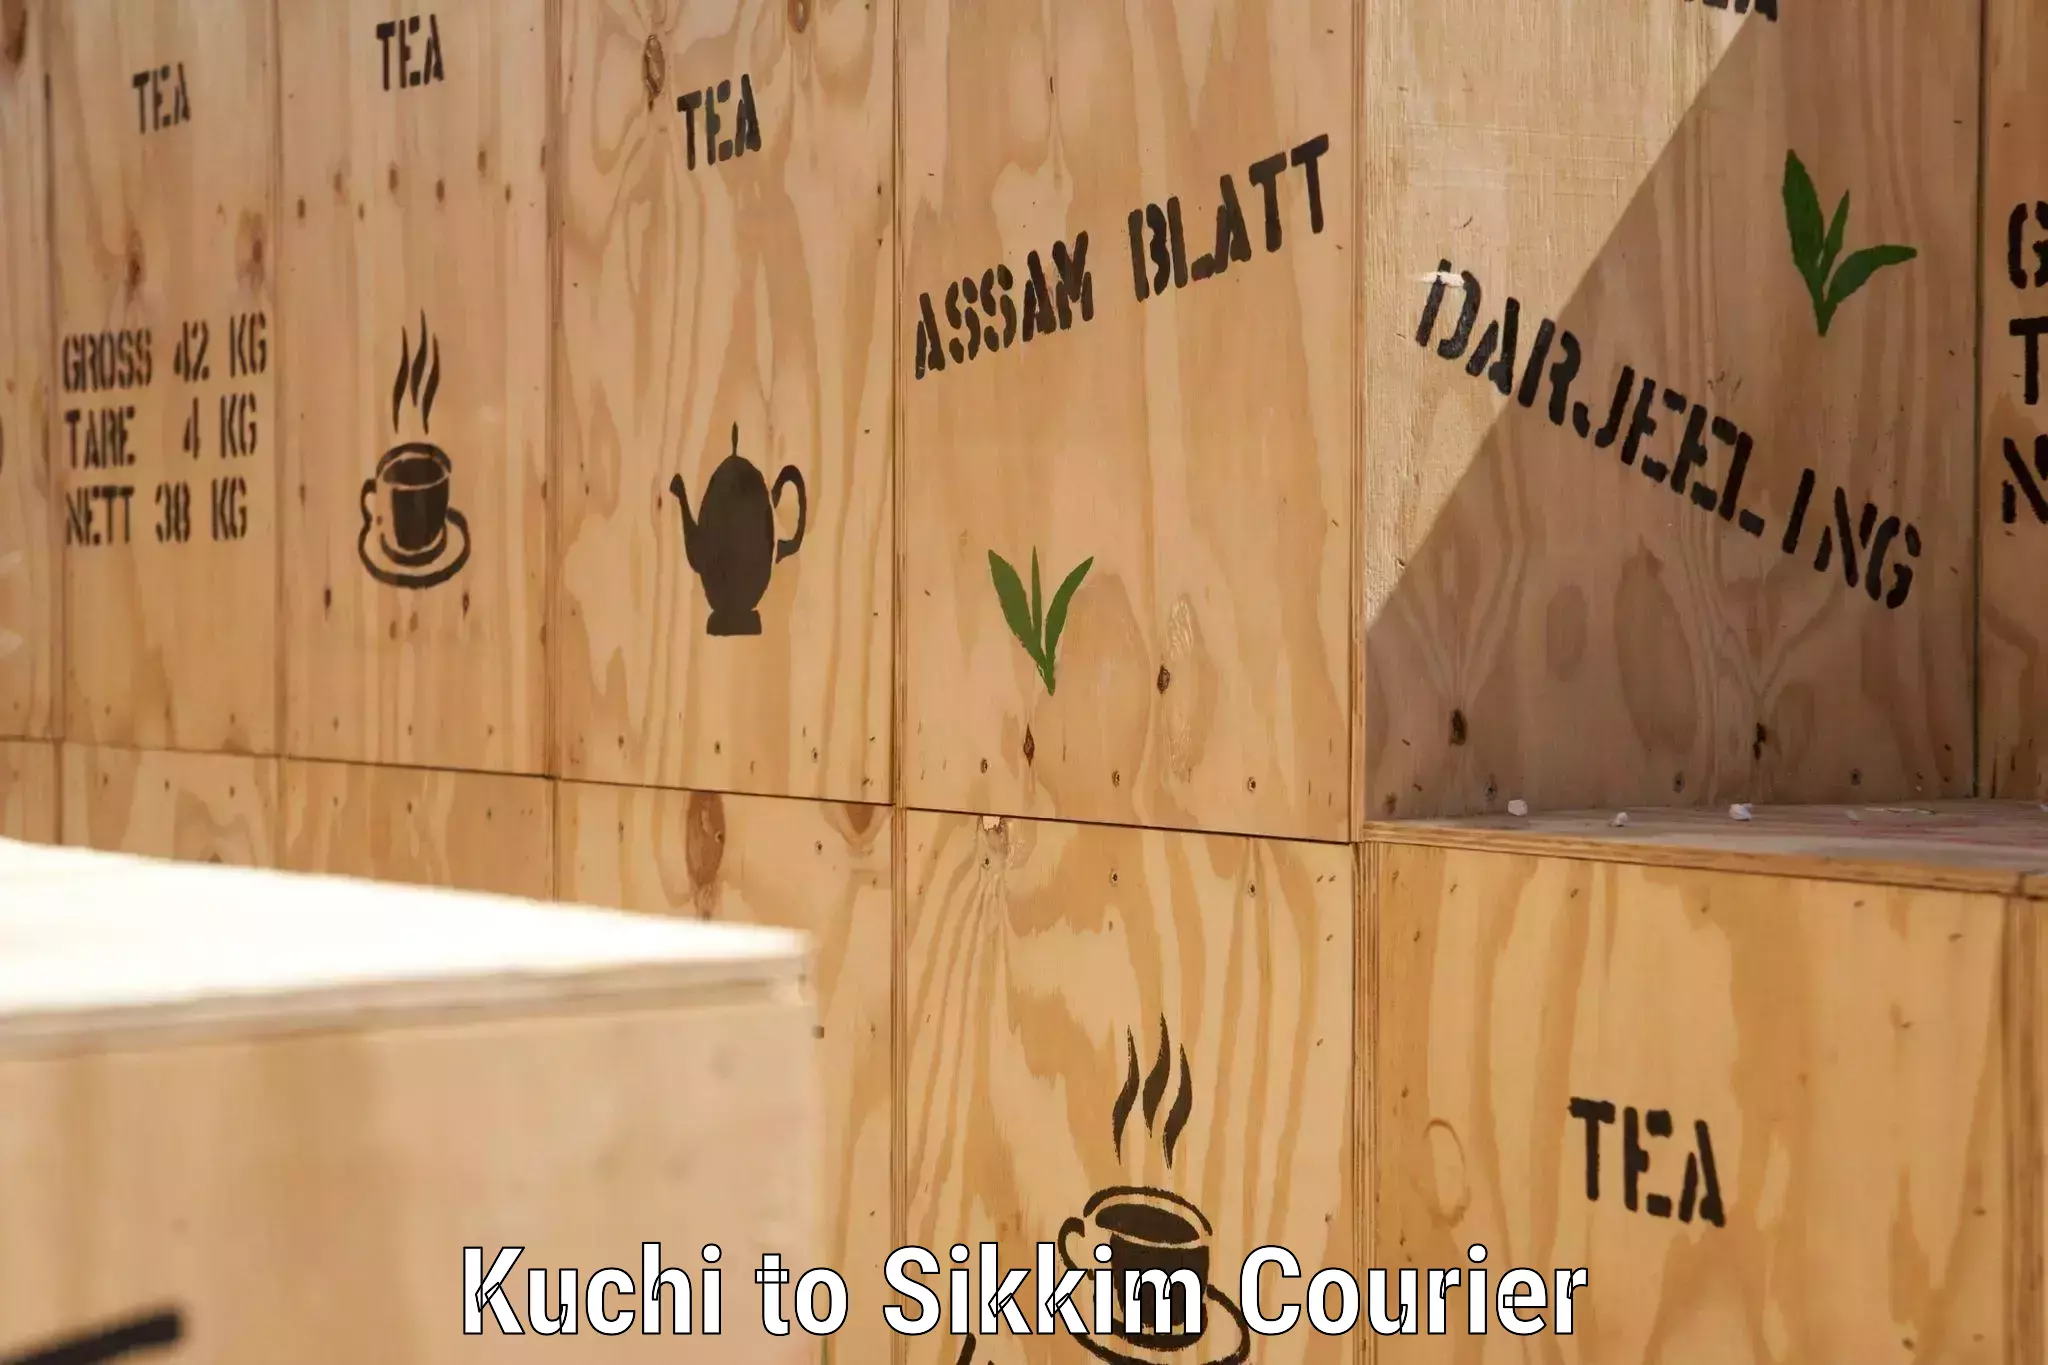 Multi-city courier Kuchi to Sikkim